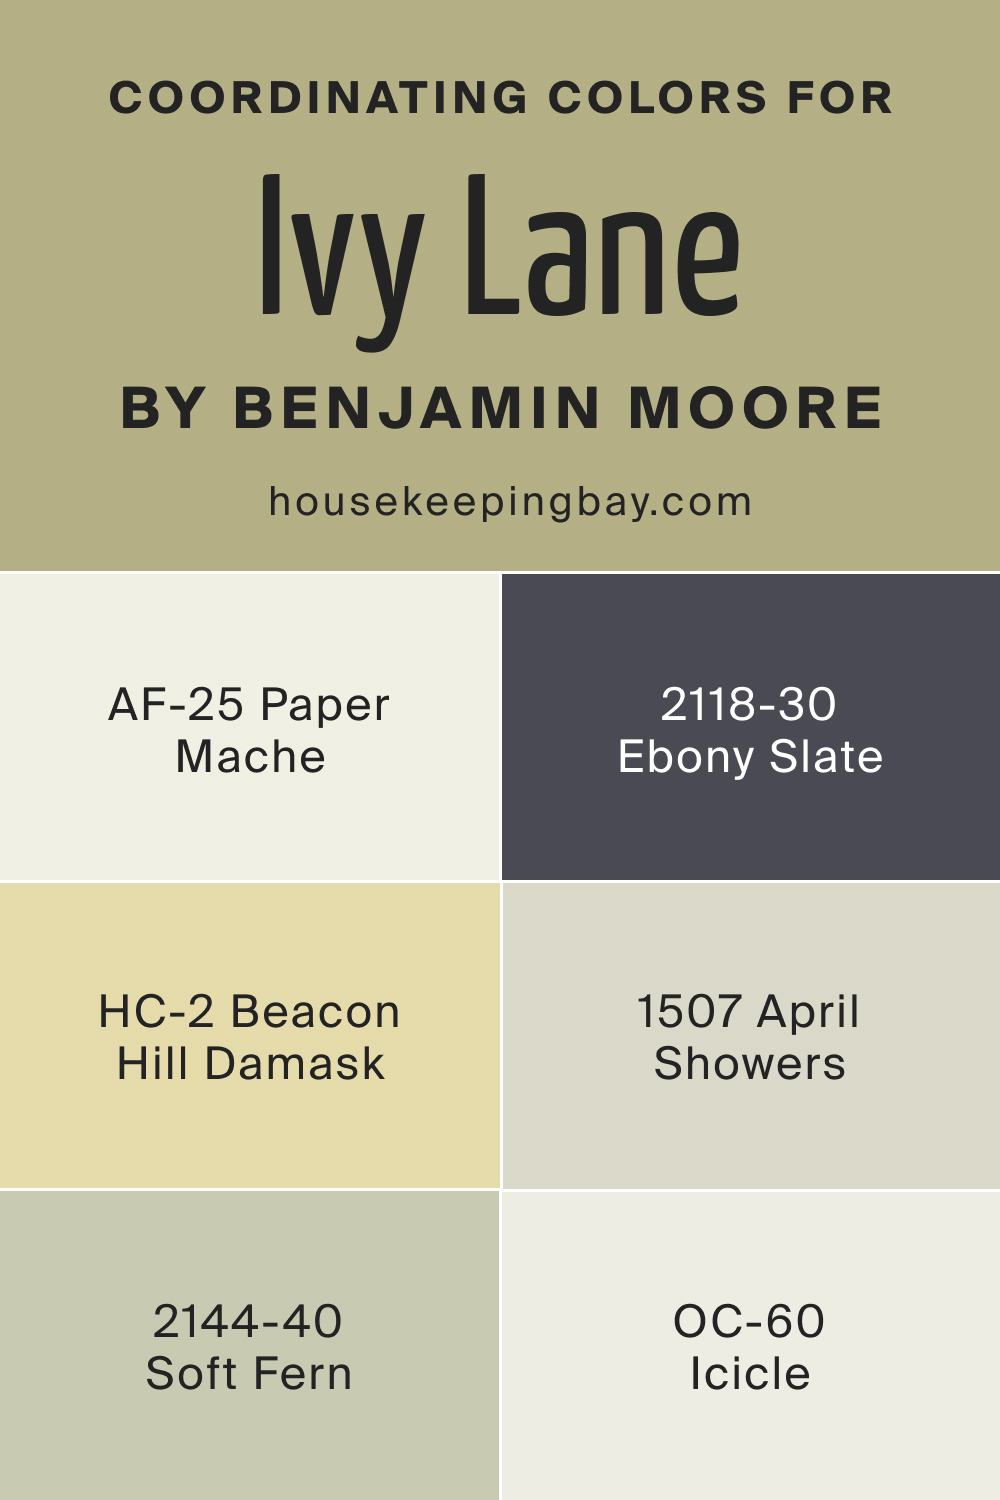 Coordinating Colors of BM Ivy Lane 523